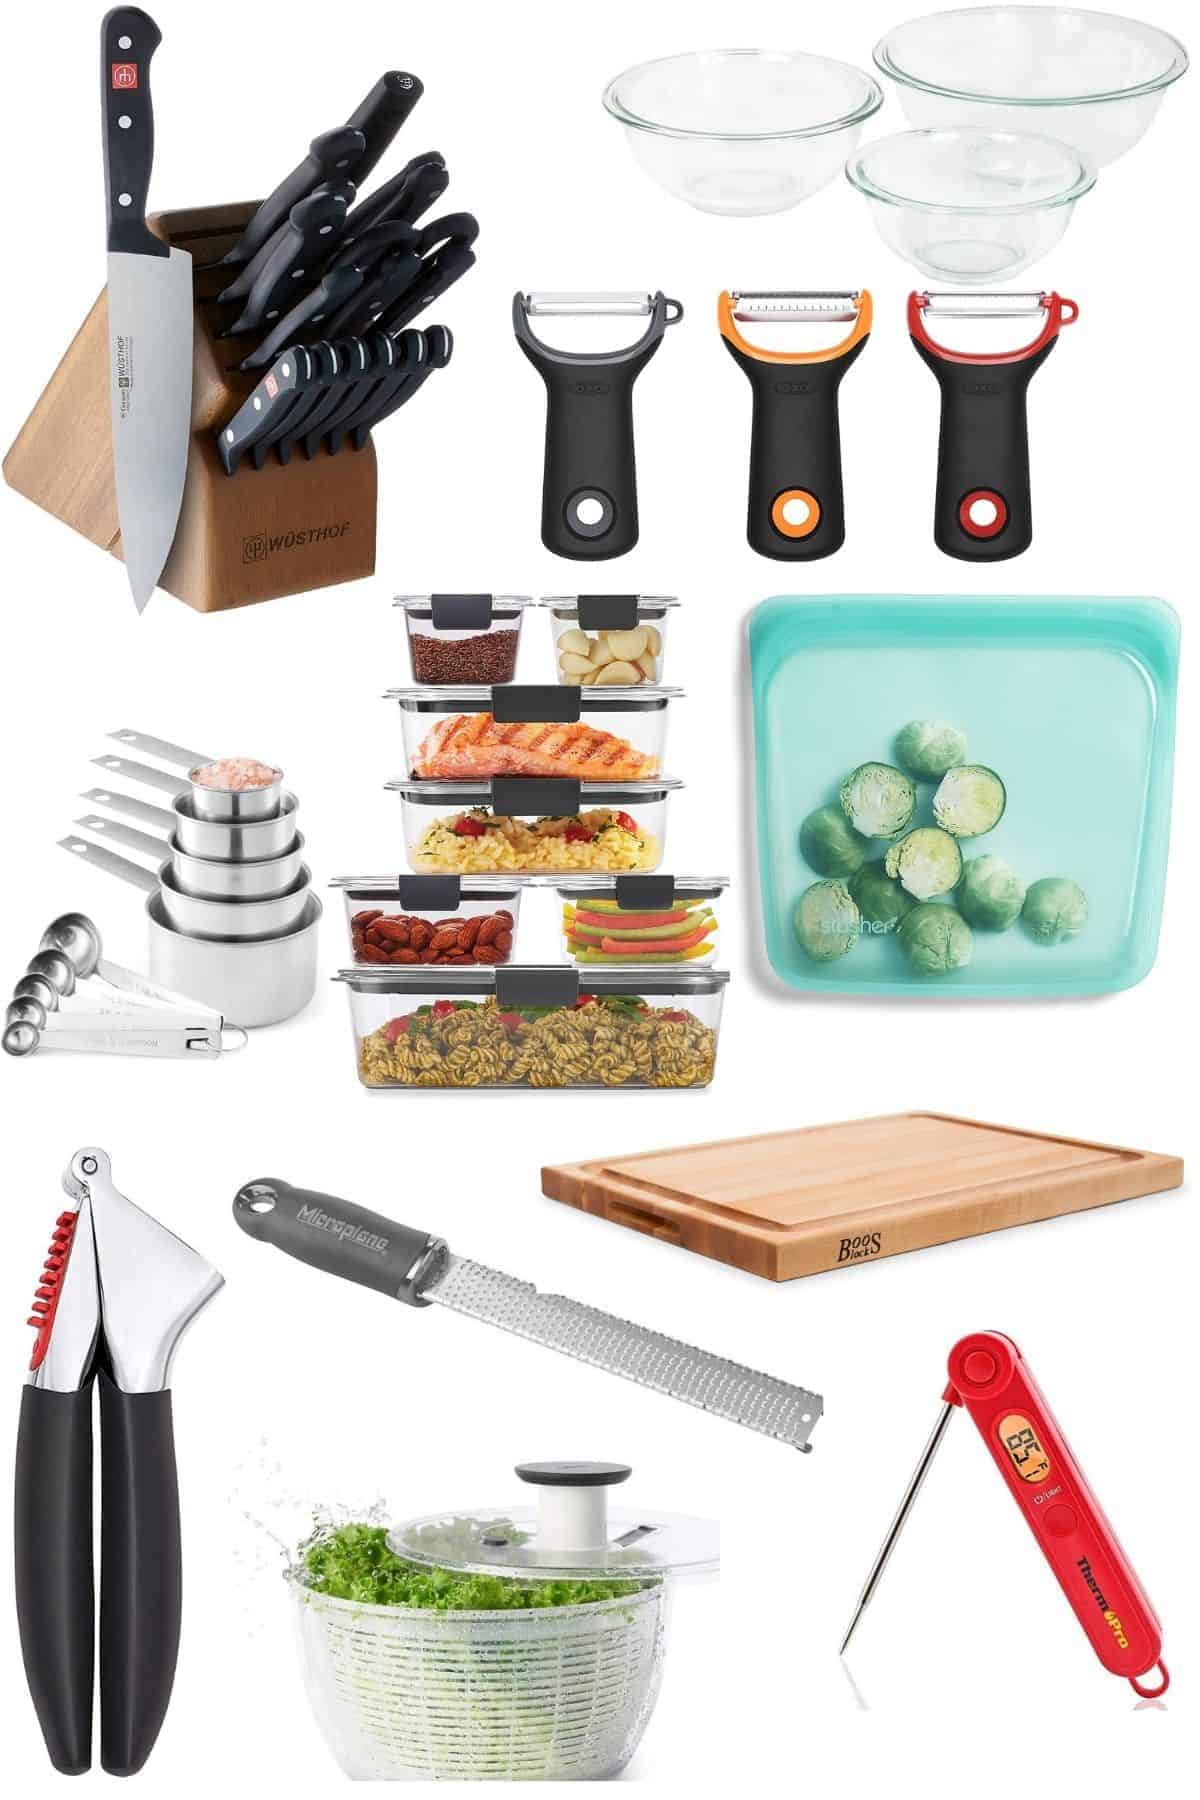 Top Ten Kitchen Tools and Gadgets!